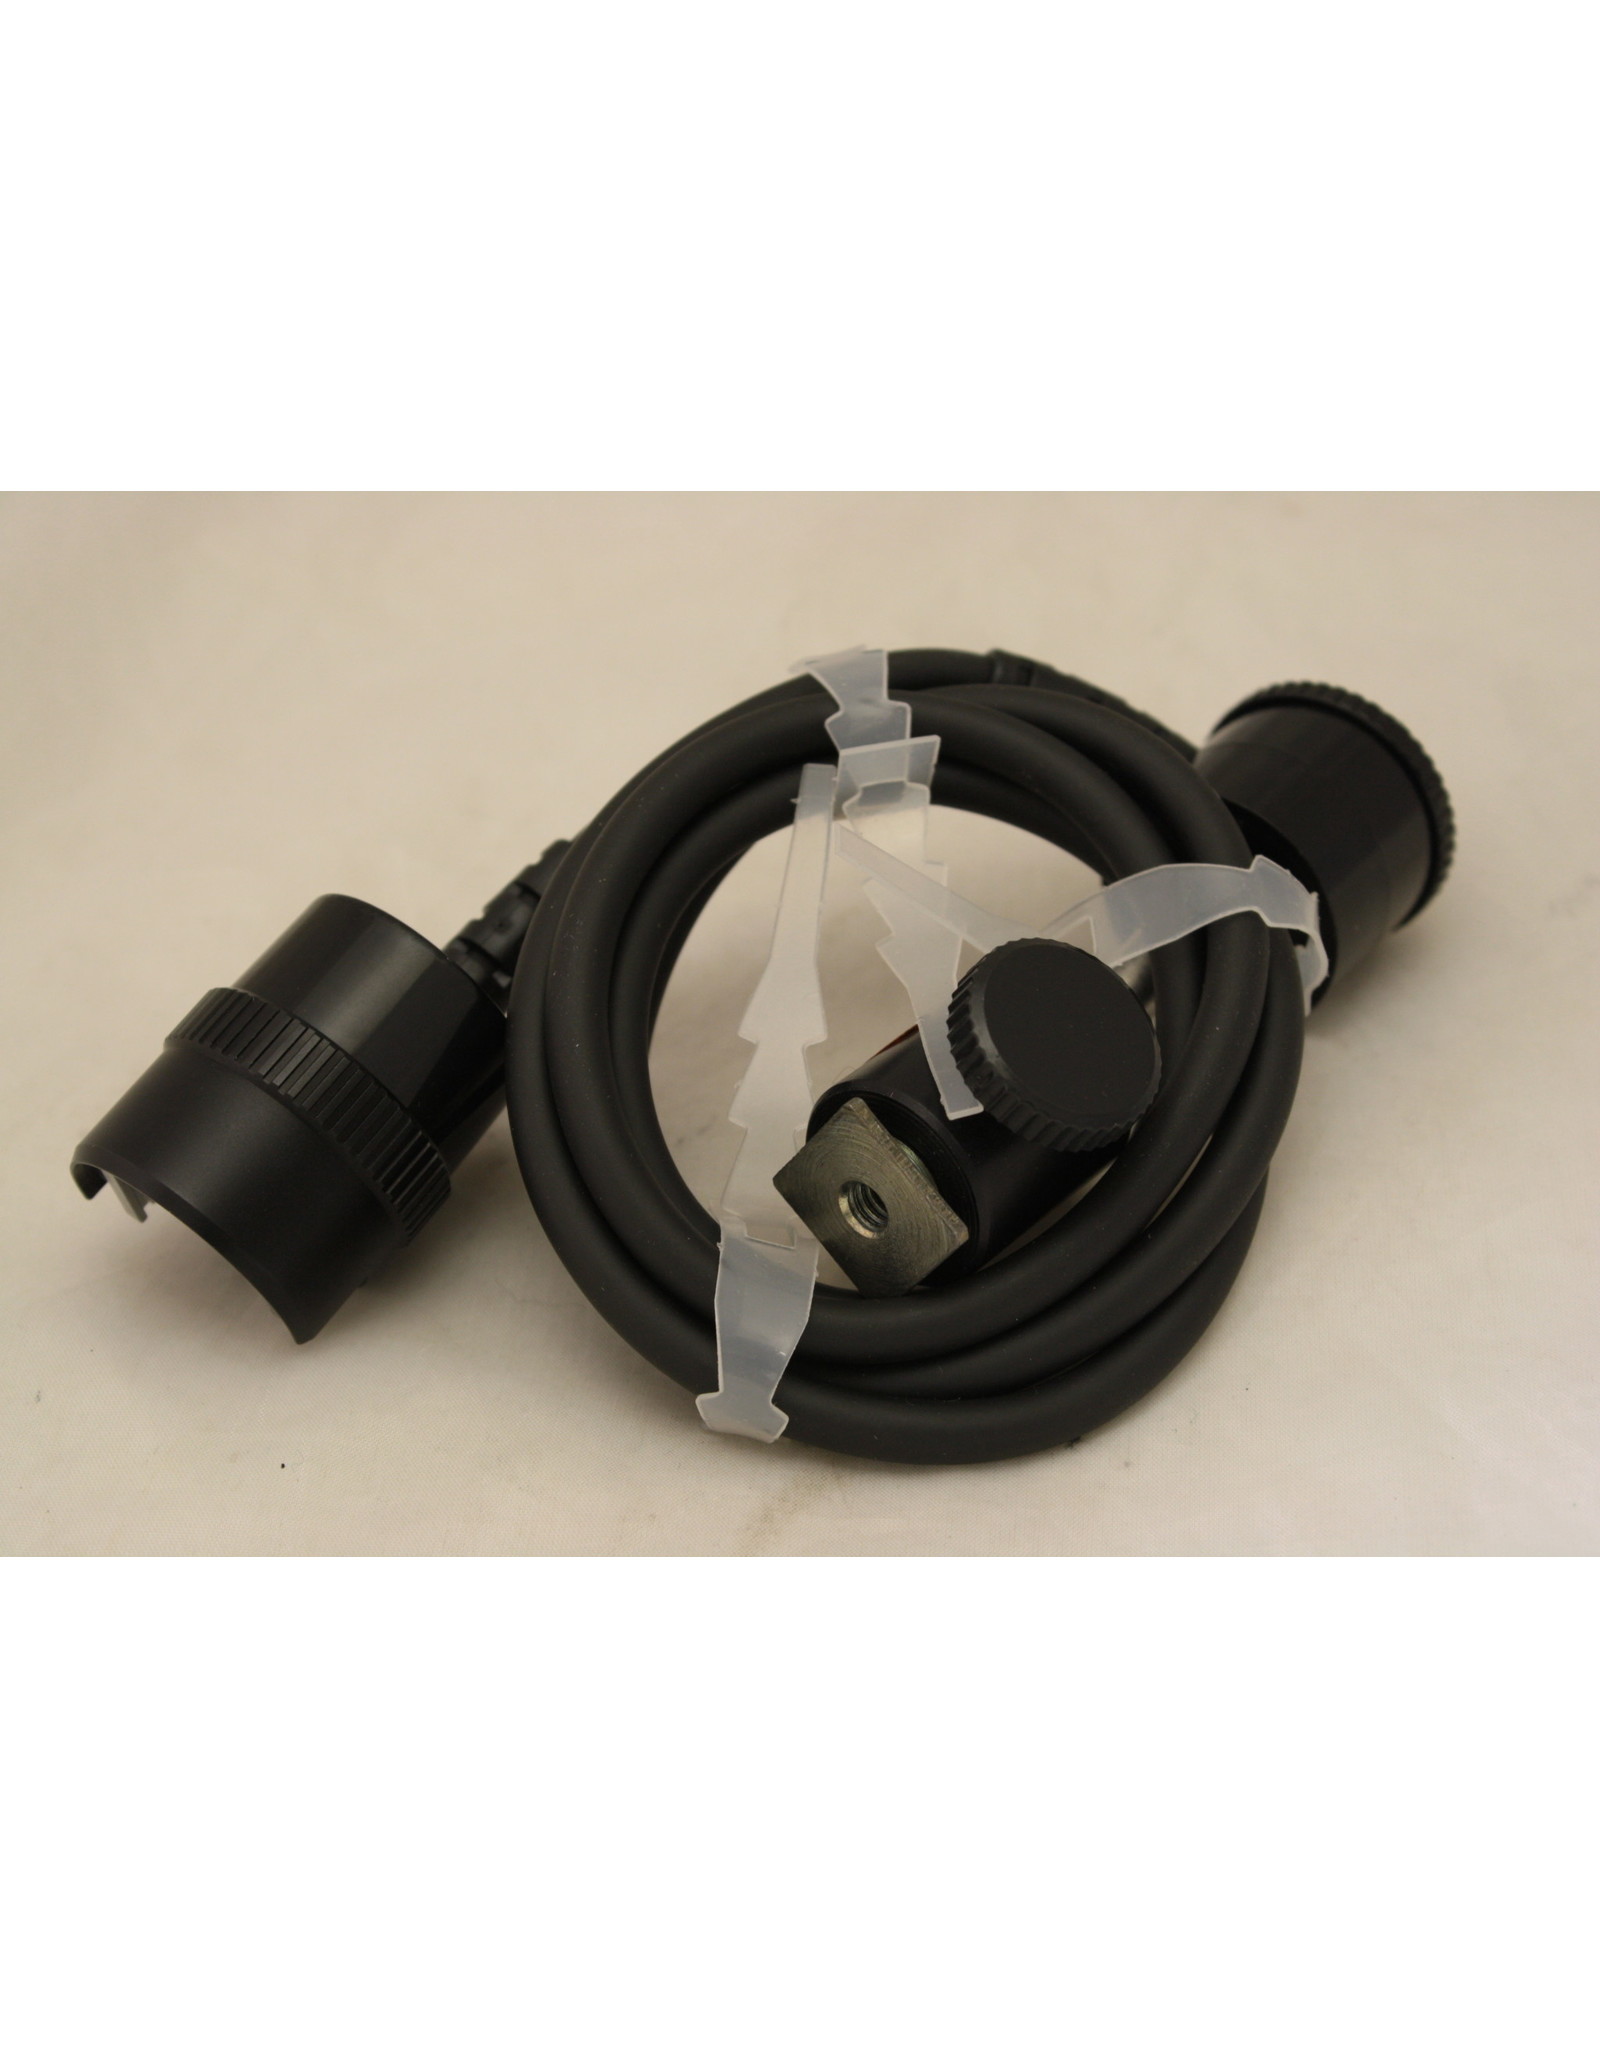 Nikon SC-14 flash sync sensor remote TTL cord for F3 cameras (Pre-owned)